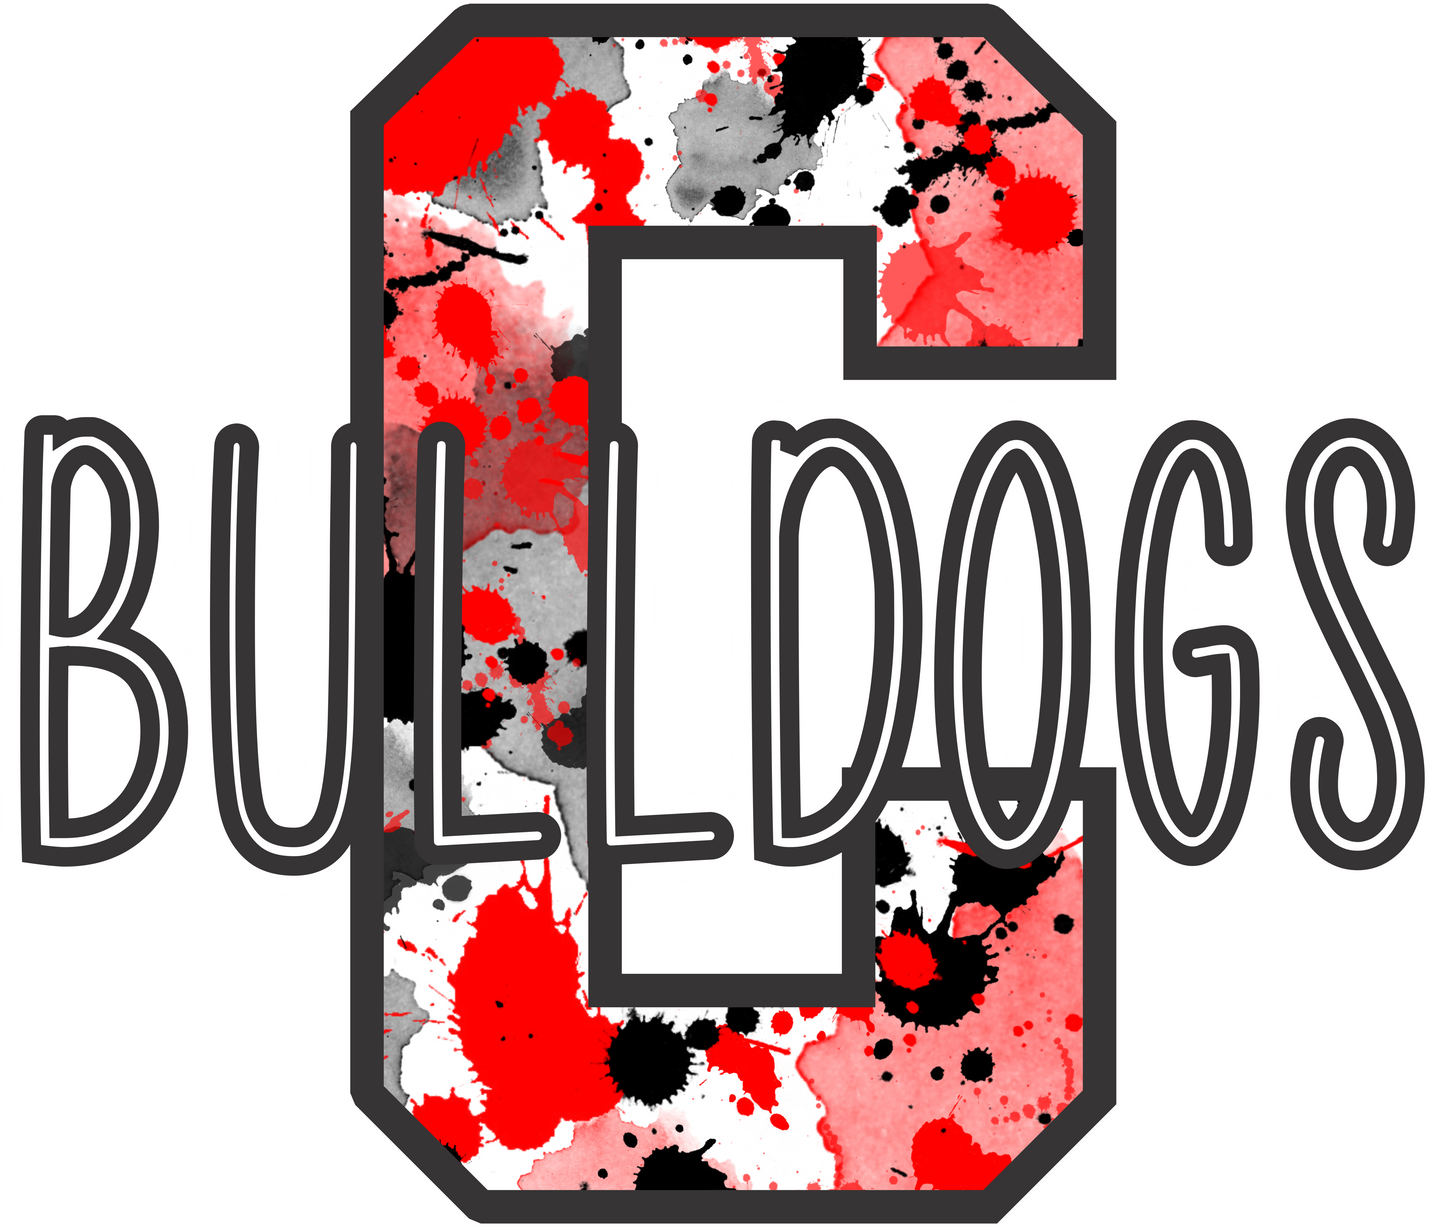 Bulldogs big C Splatter Design Transfer